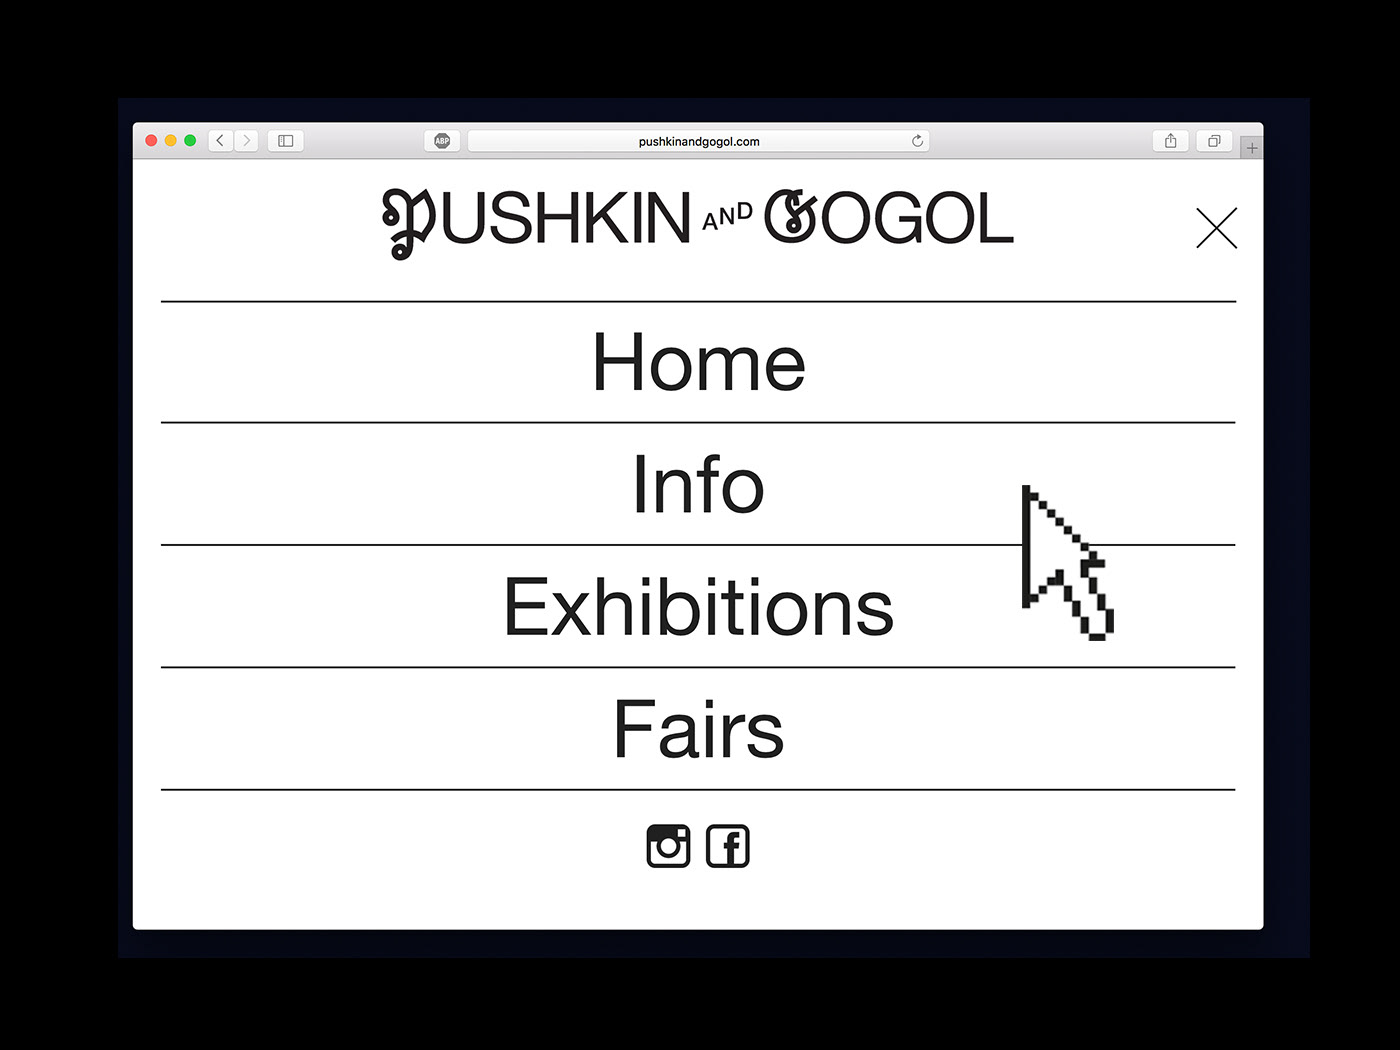 Pushkin and Gogol Webdesign coding contemporary Art Gallery  kreuzberg director Kevin Rubén Jacobs Exhibition 